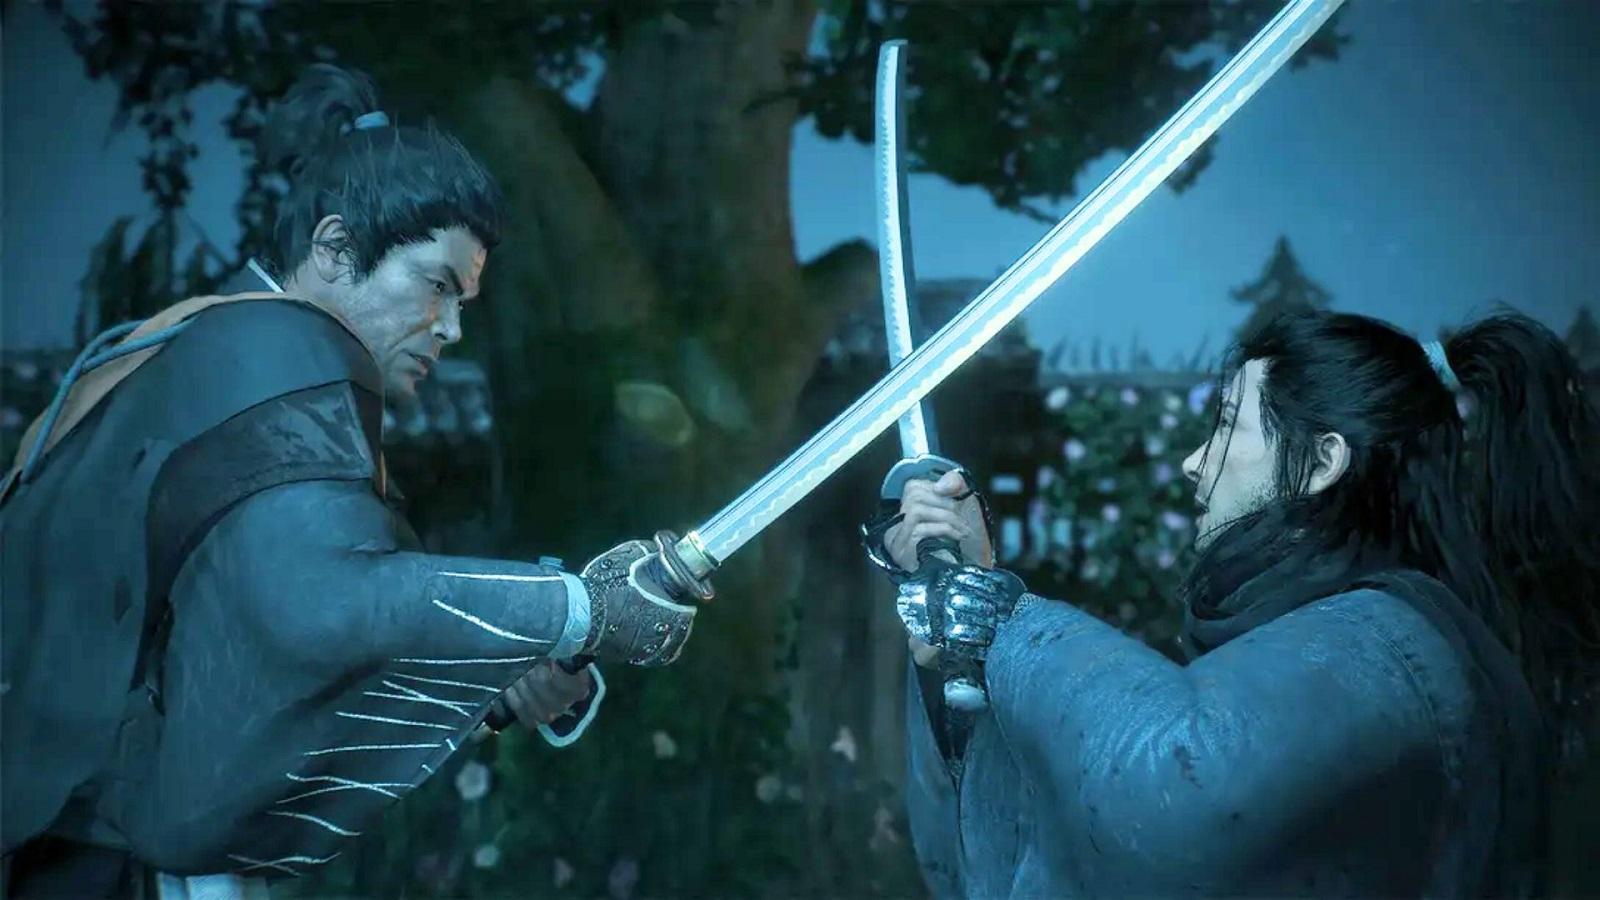 Two samurai fighting